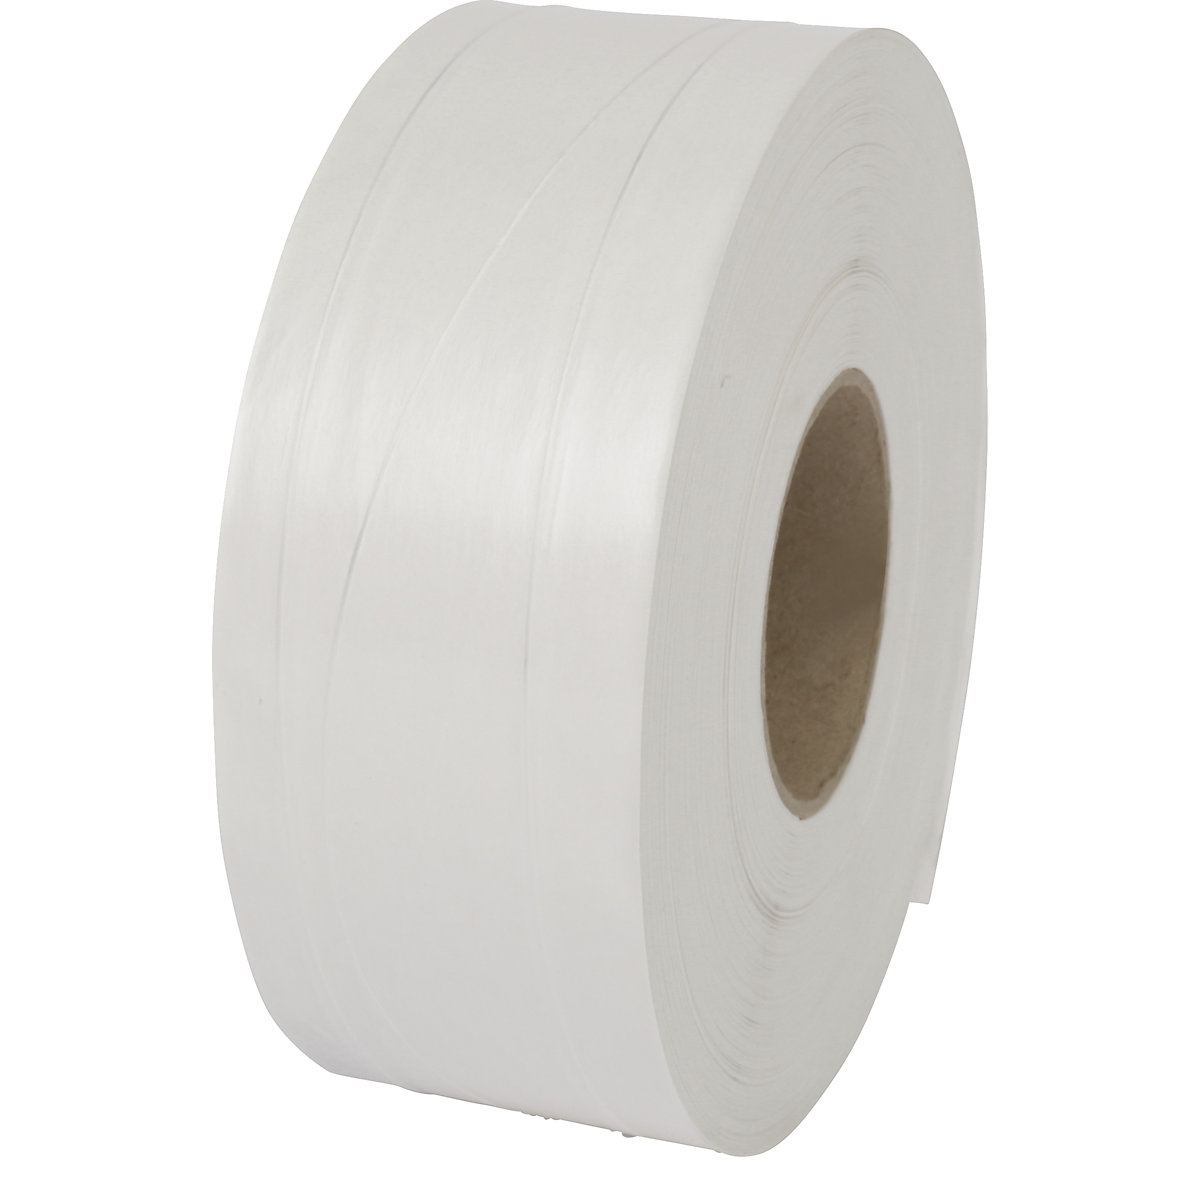 Gummed tape, triple fibre reinforced, pack of 12 rolls, white, tape width 70 mm-3